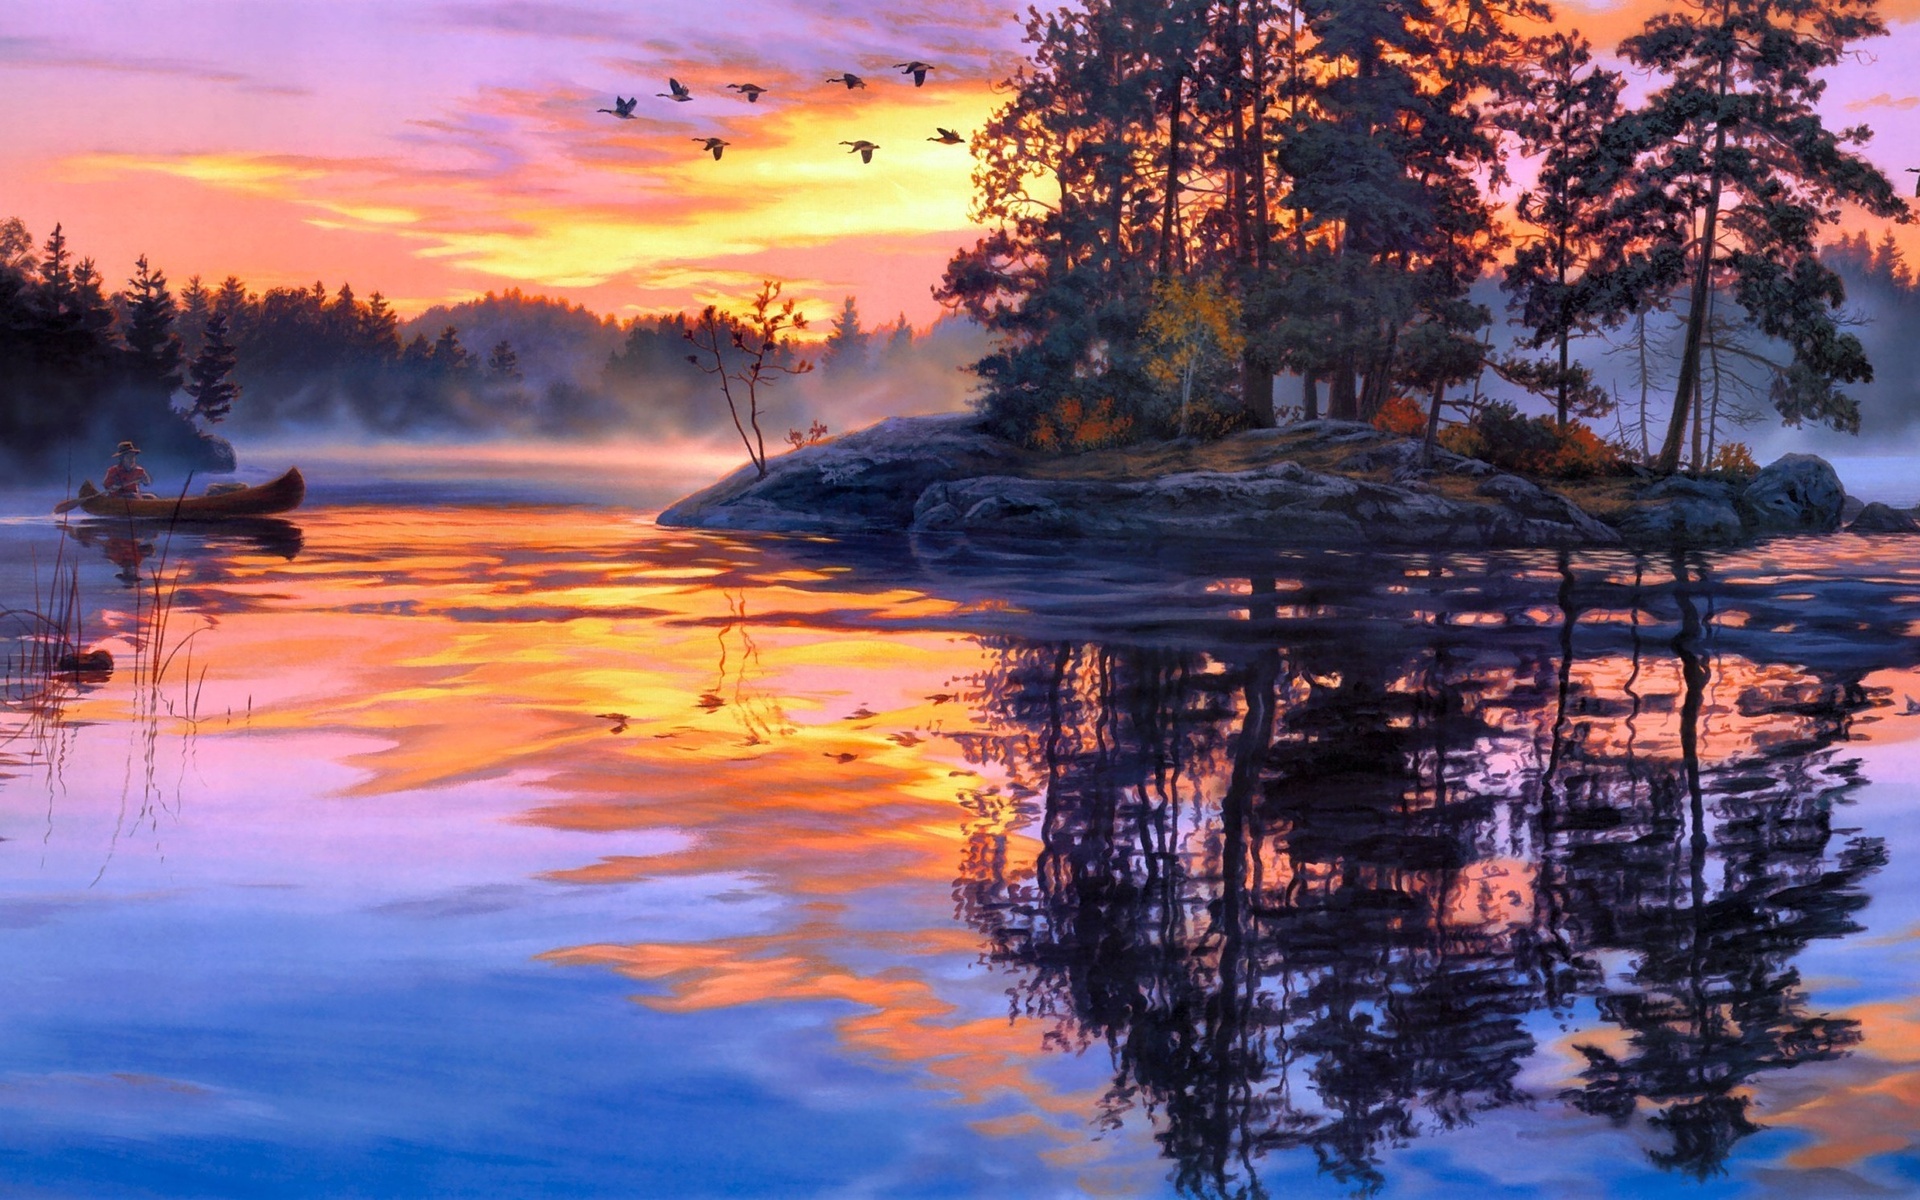 darrell, Bush, Art, Paintings, Lakes, Water, Reflection, Sky, Clouds, Sunset, Sunrise, Boats, Fishing, People, Birds, Islands, Fog Wallpaper